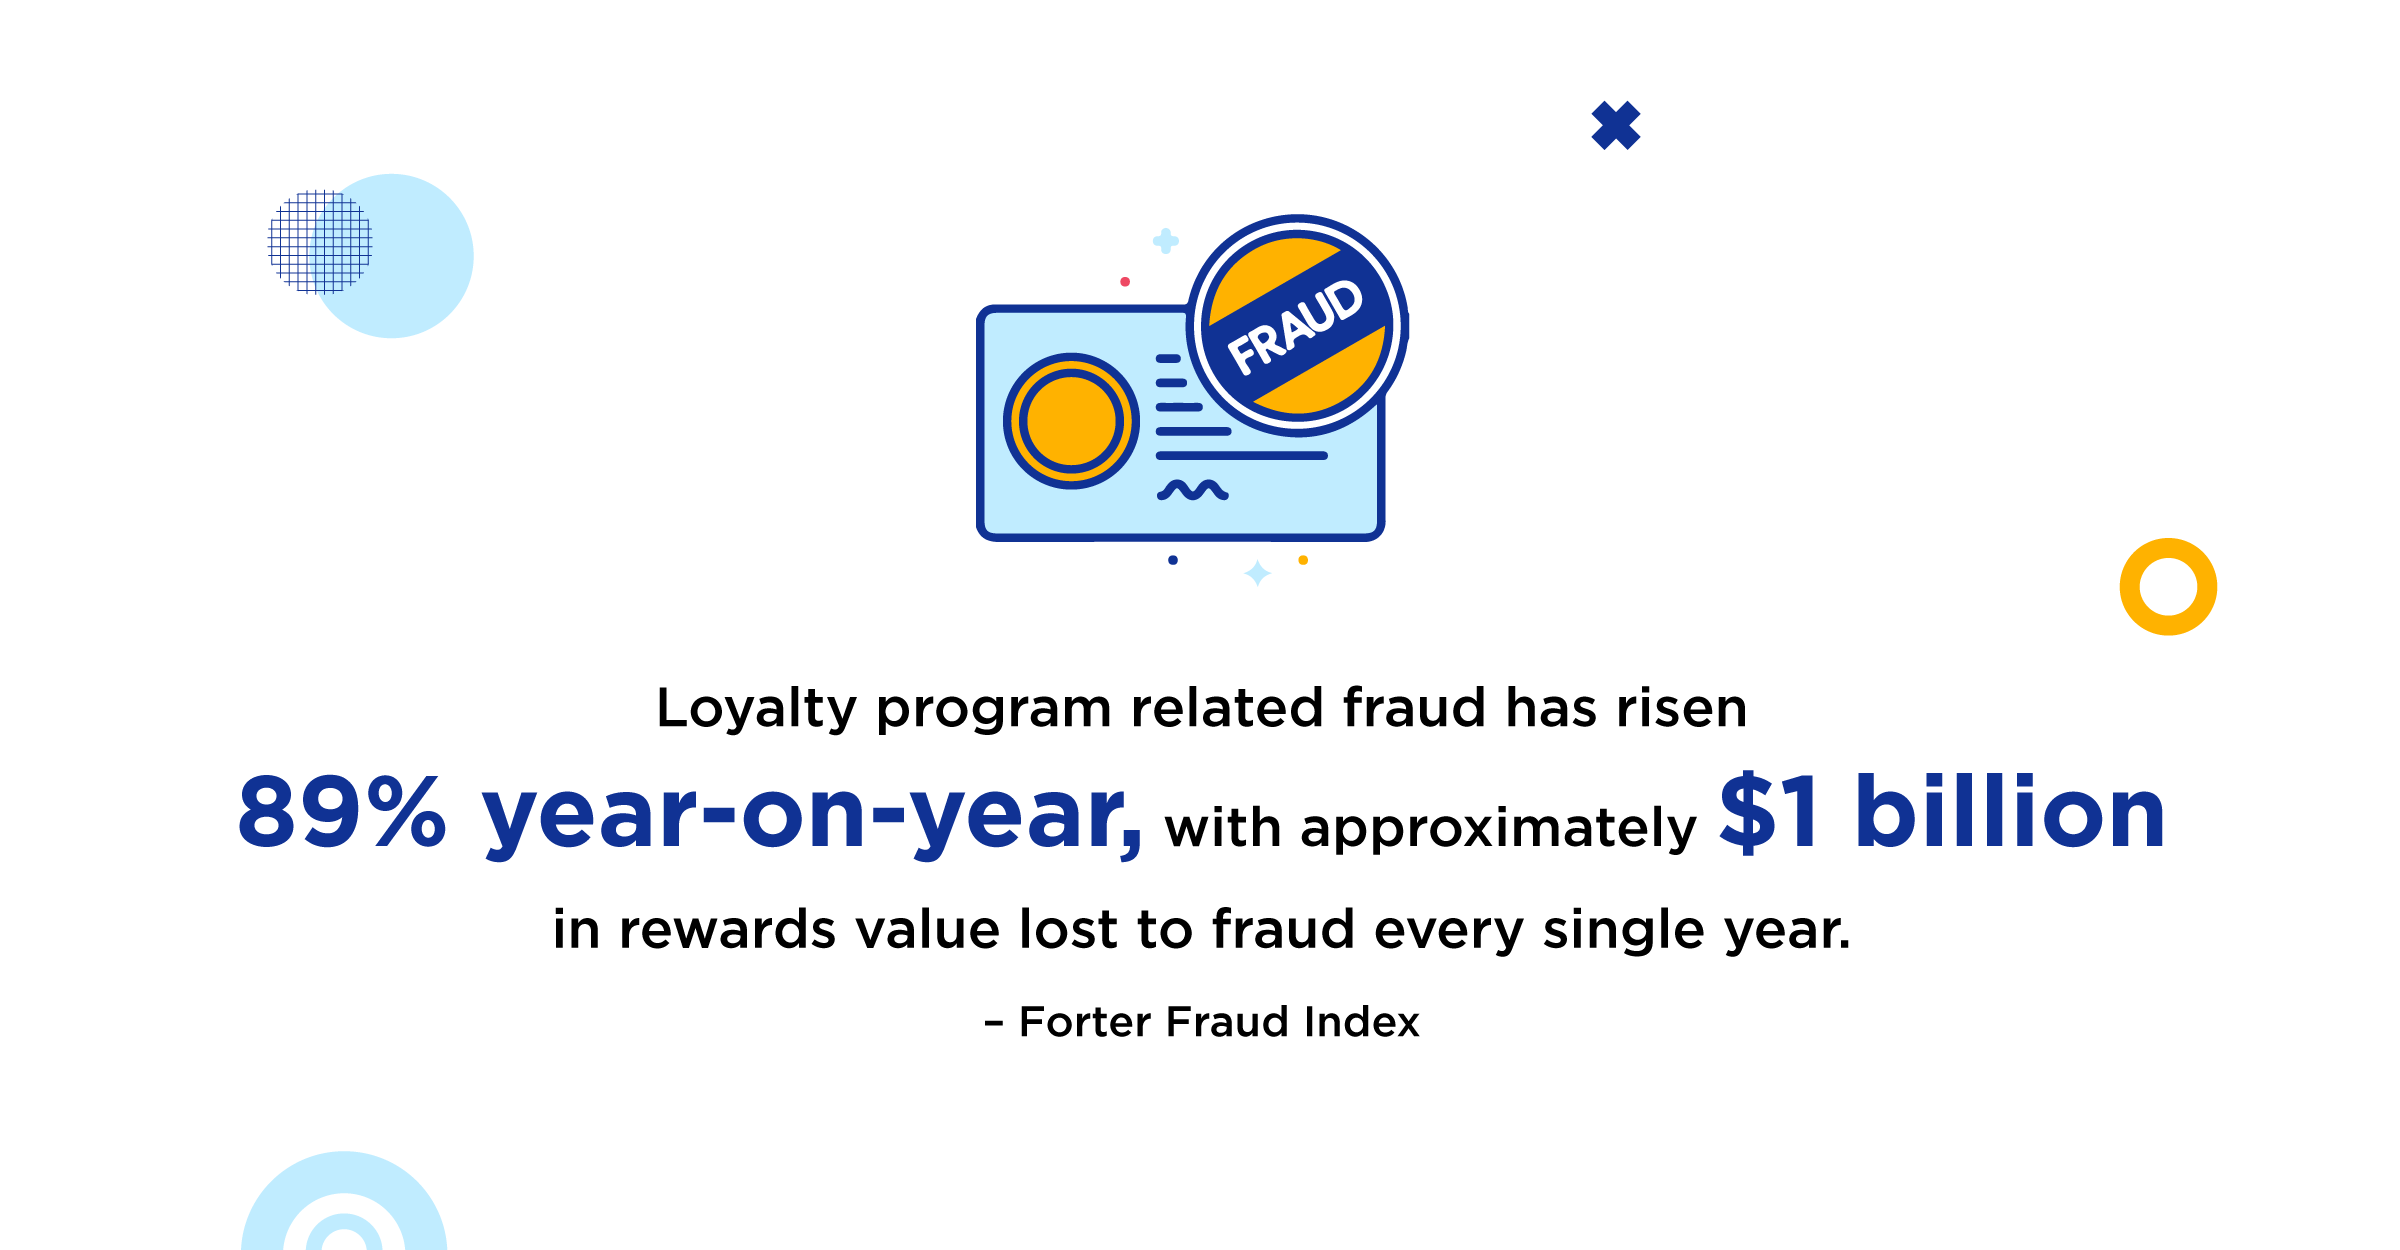 customer-oyalty-program-fraud (4)